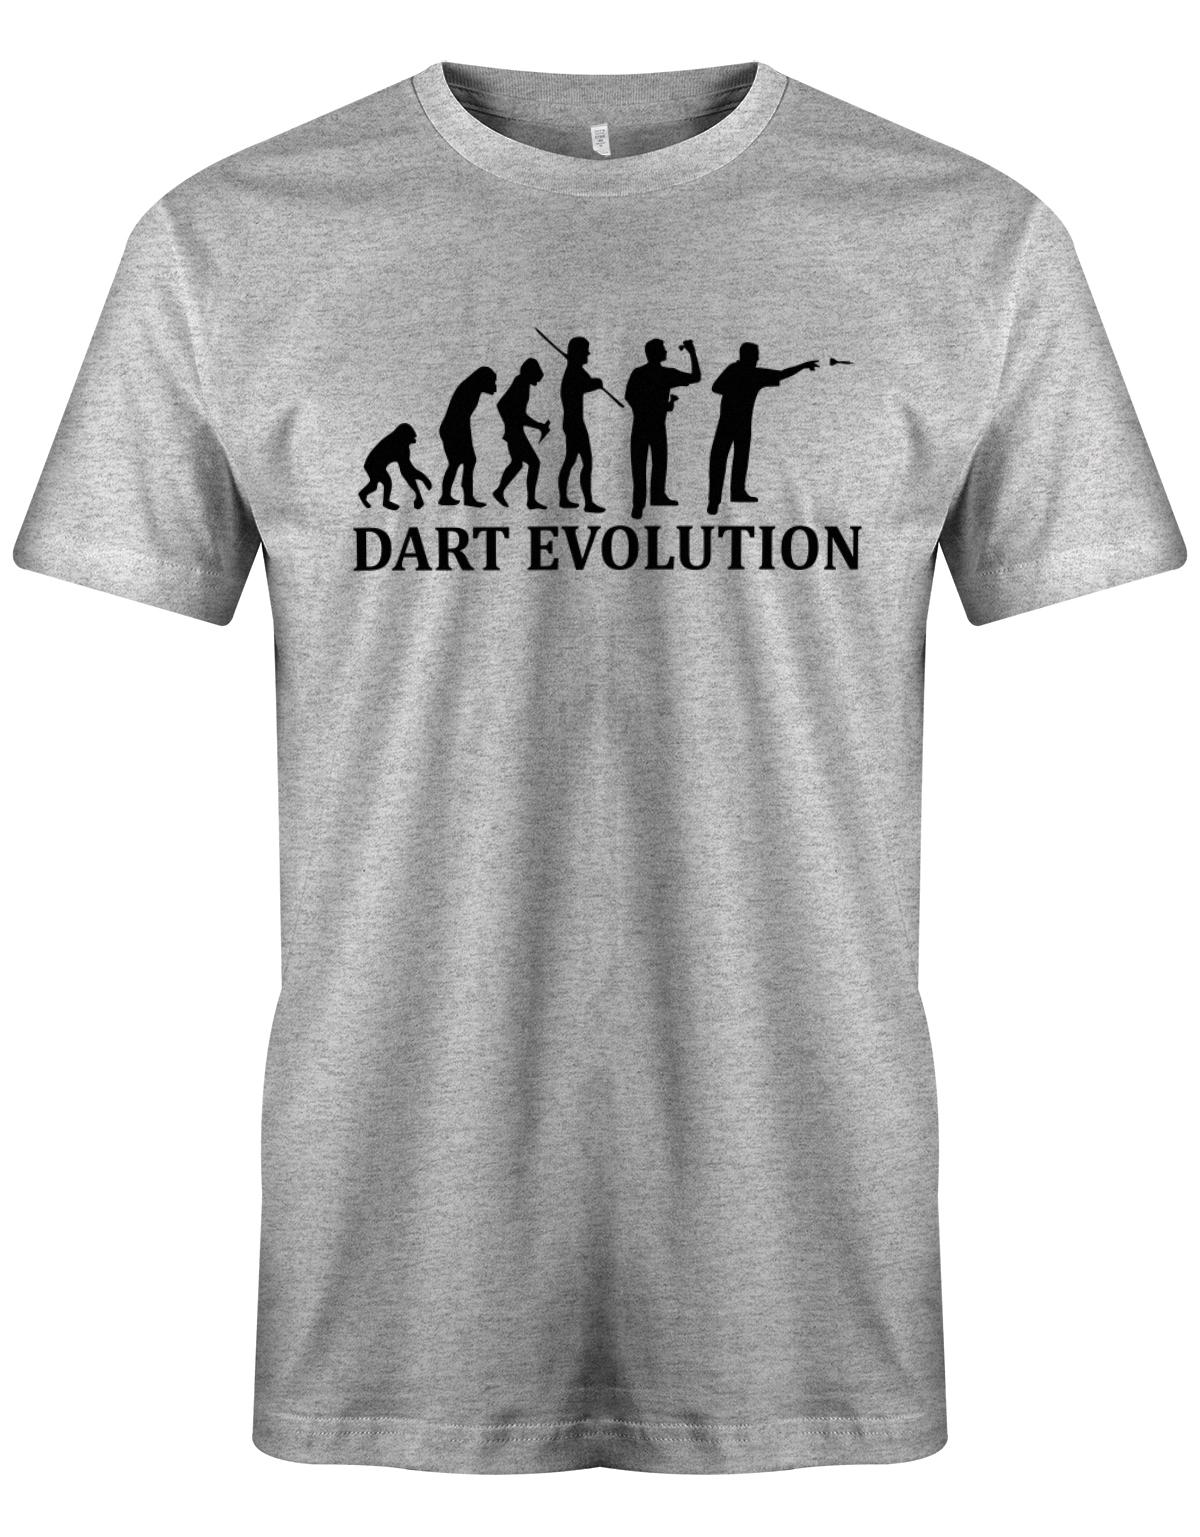 Dart Evolution - Herren Dart T-Shirt Grau